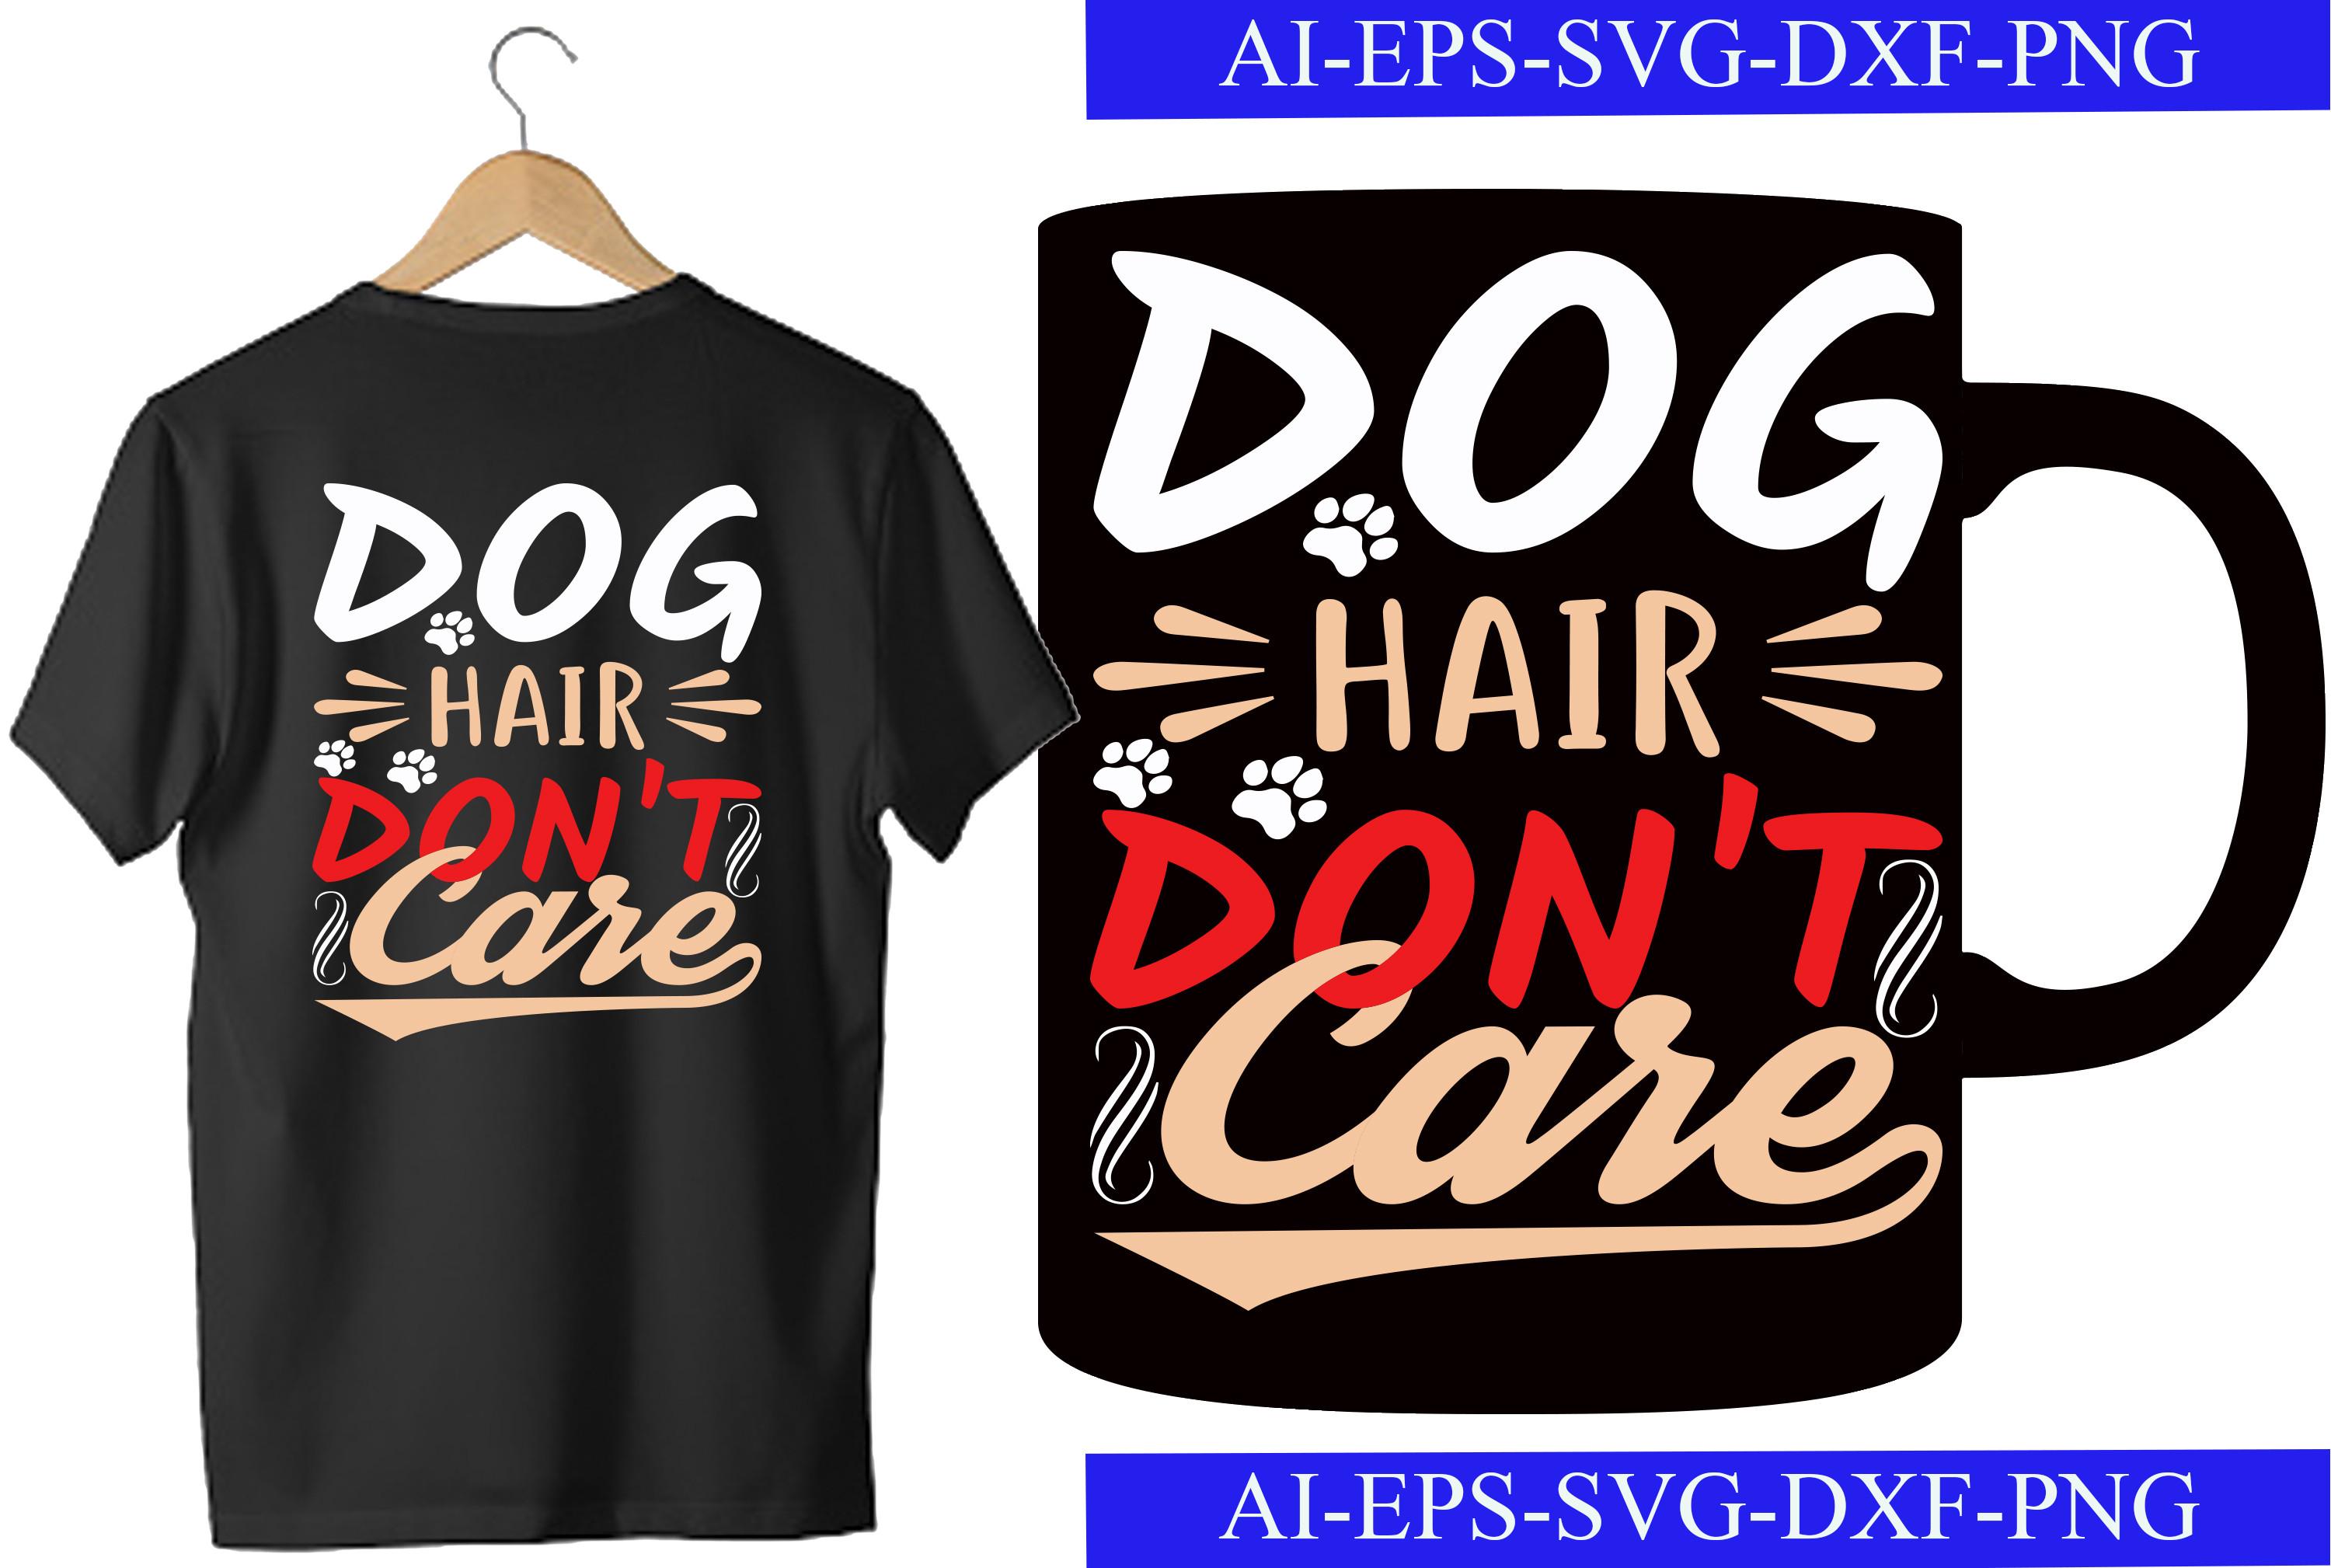 Dog Hair, Don't Care T-shirt Design